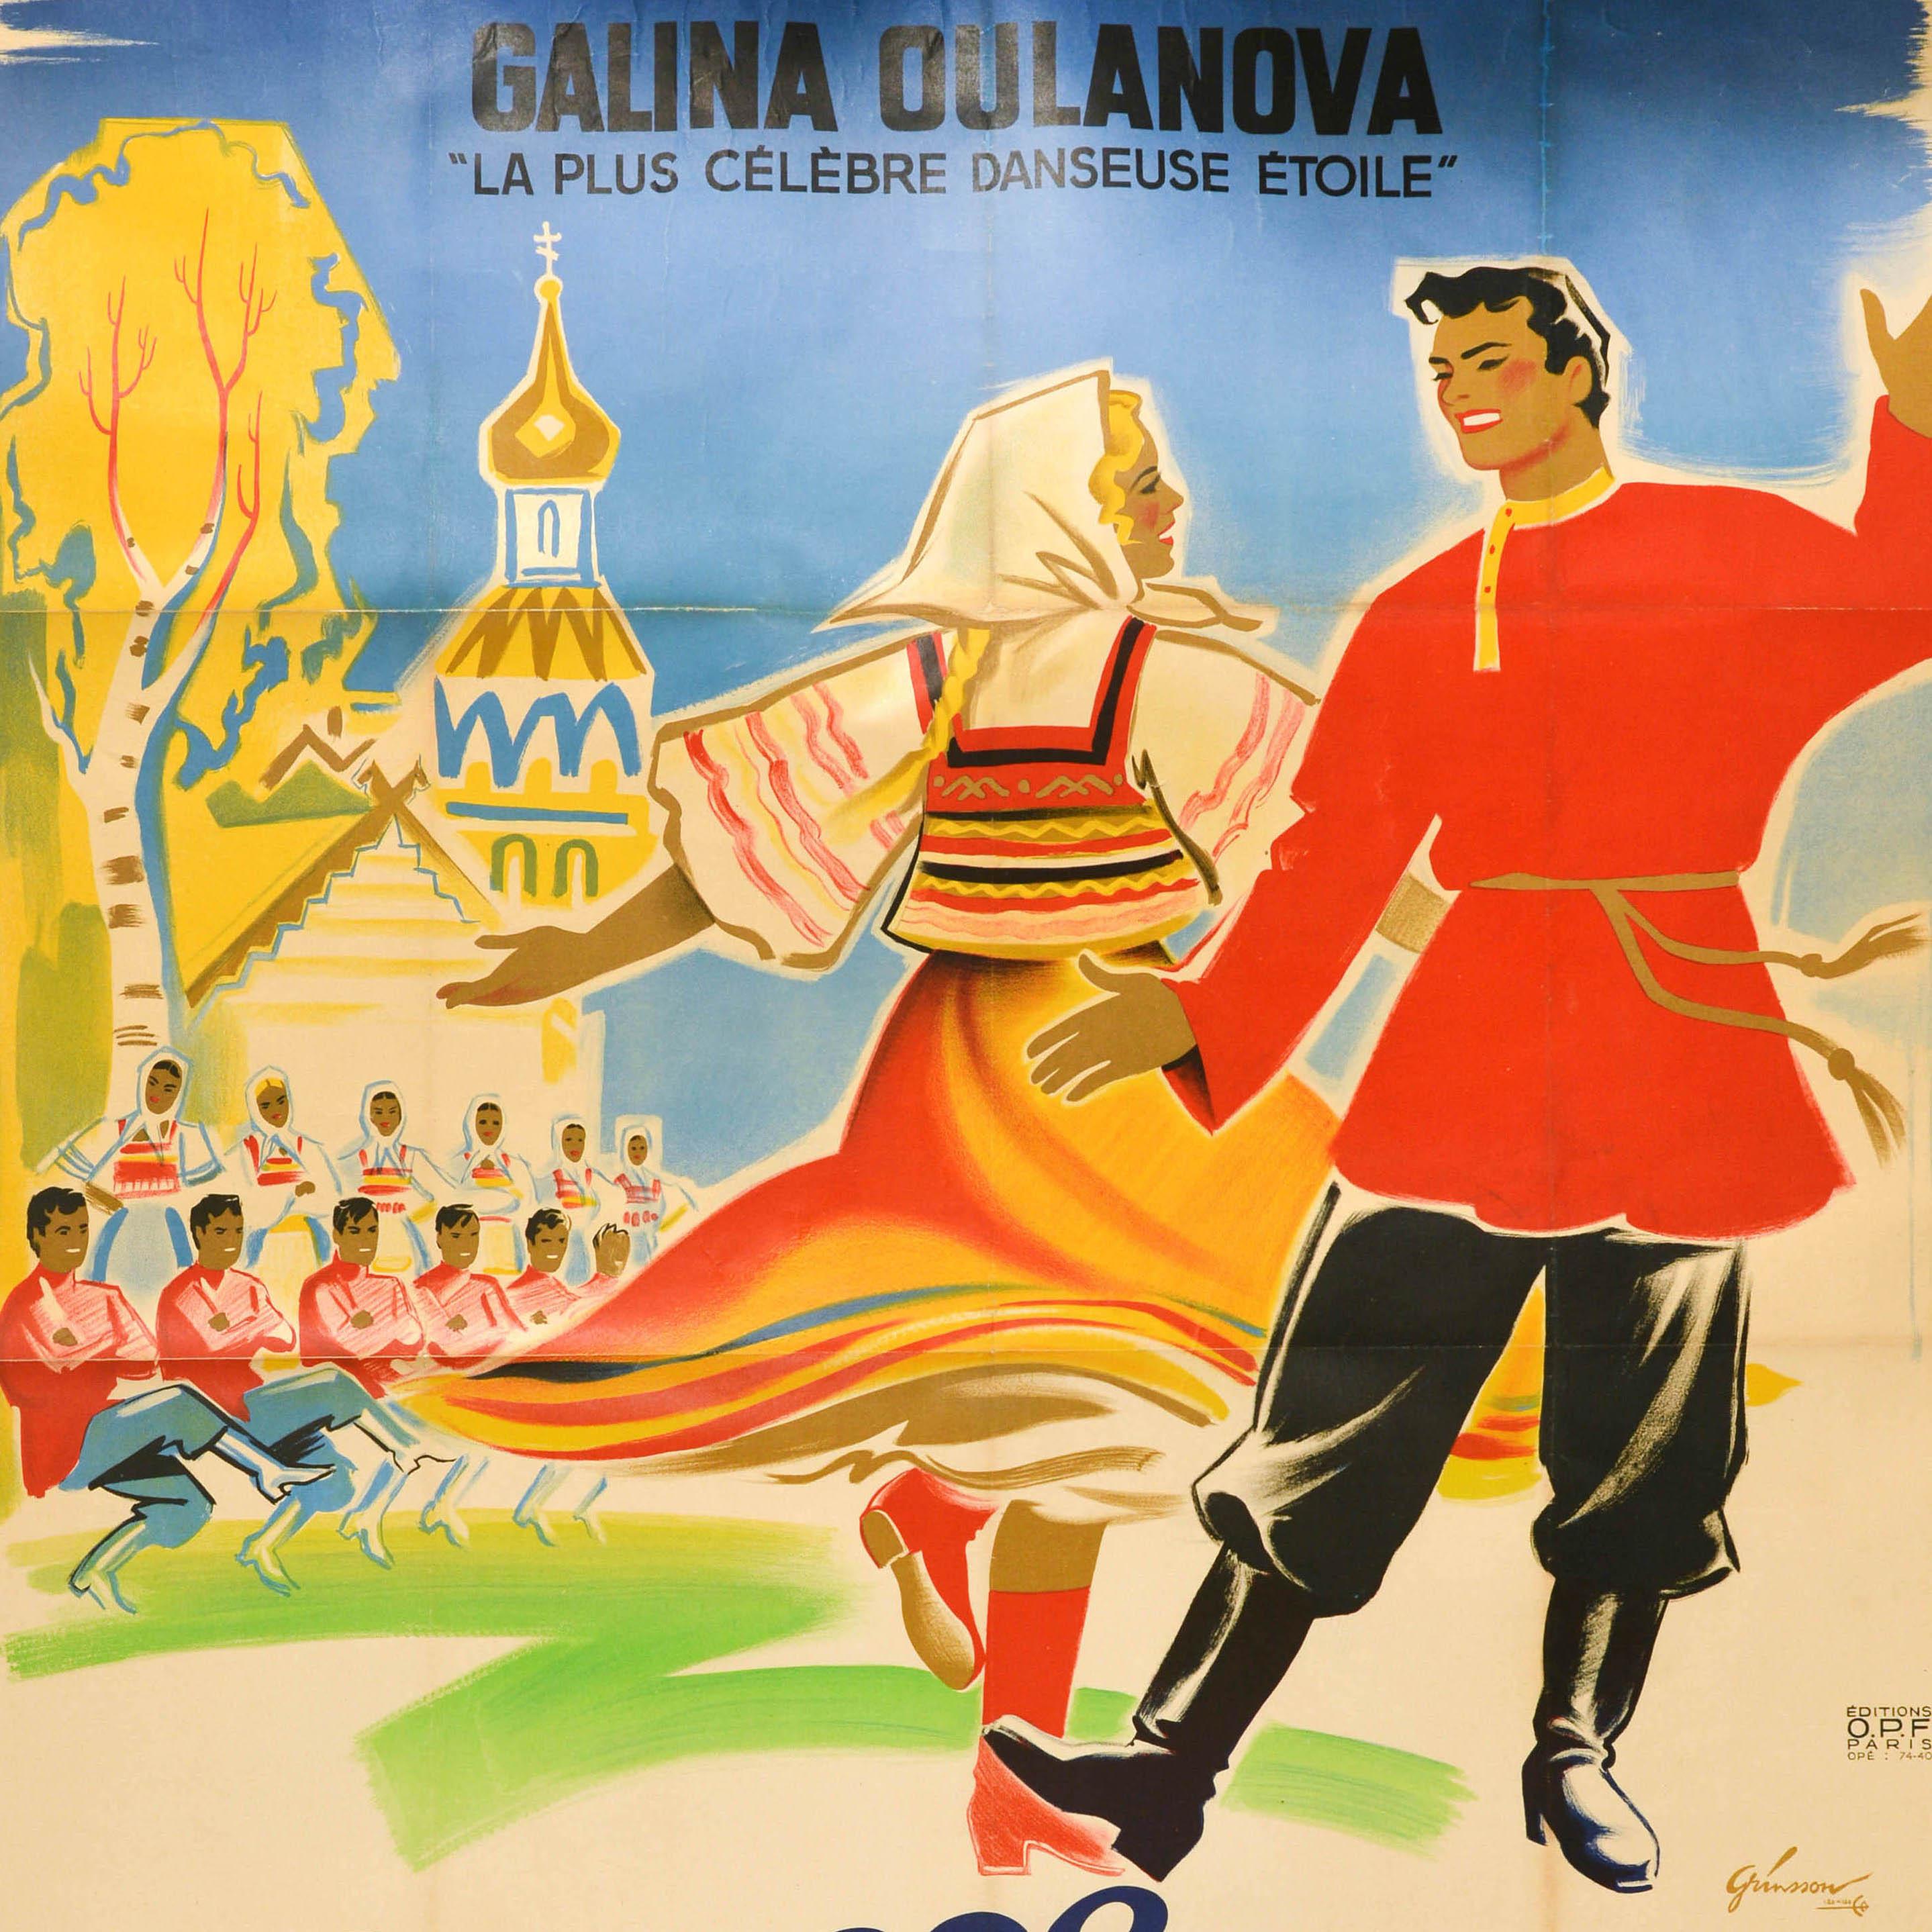 Original Vintage Filmplakat für einen Tanzfilm mit Galina Oulanova la plus celebre danseuse etoile Danses Populaires et les Ballet Russes rythme entrain gaite! / Galina Ulanova die berühmteste Primaballerina Populäre Tänze und die Ballets Russes